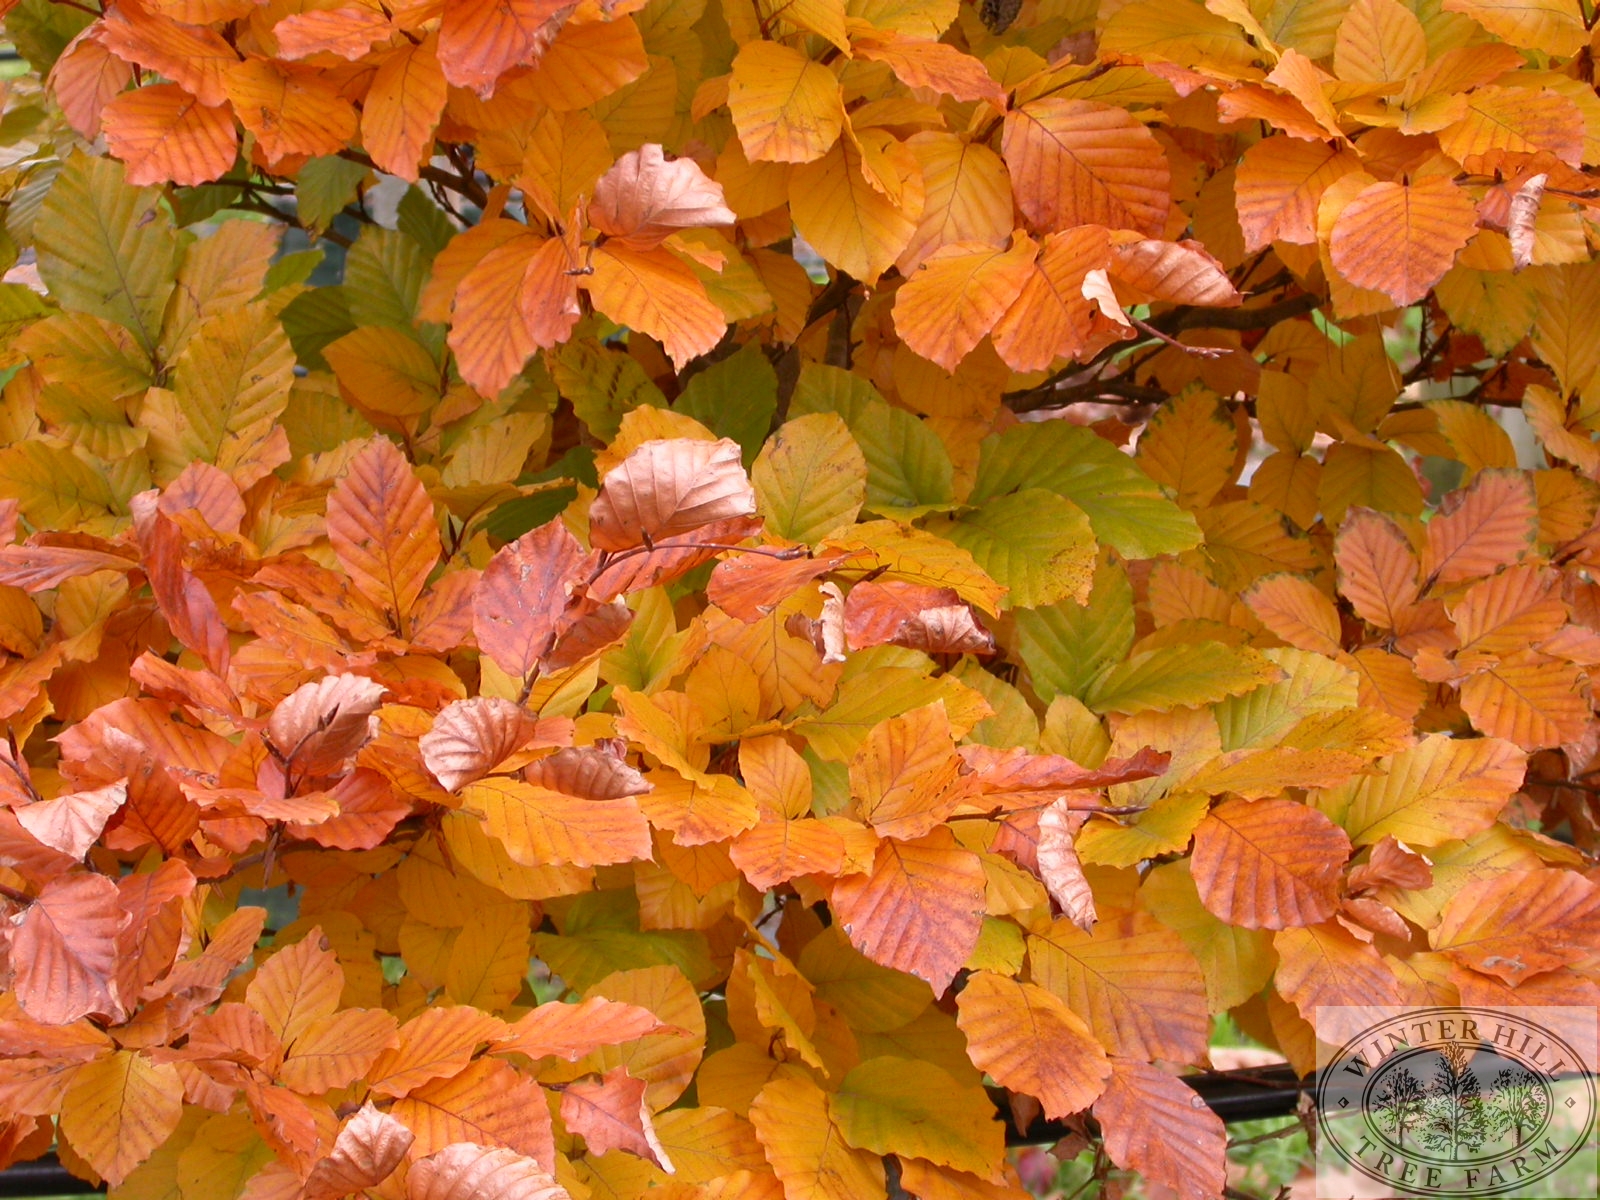 Cuprea Autumn leaves